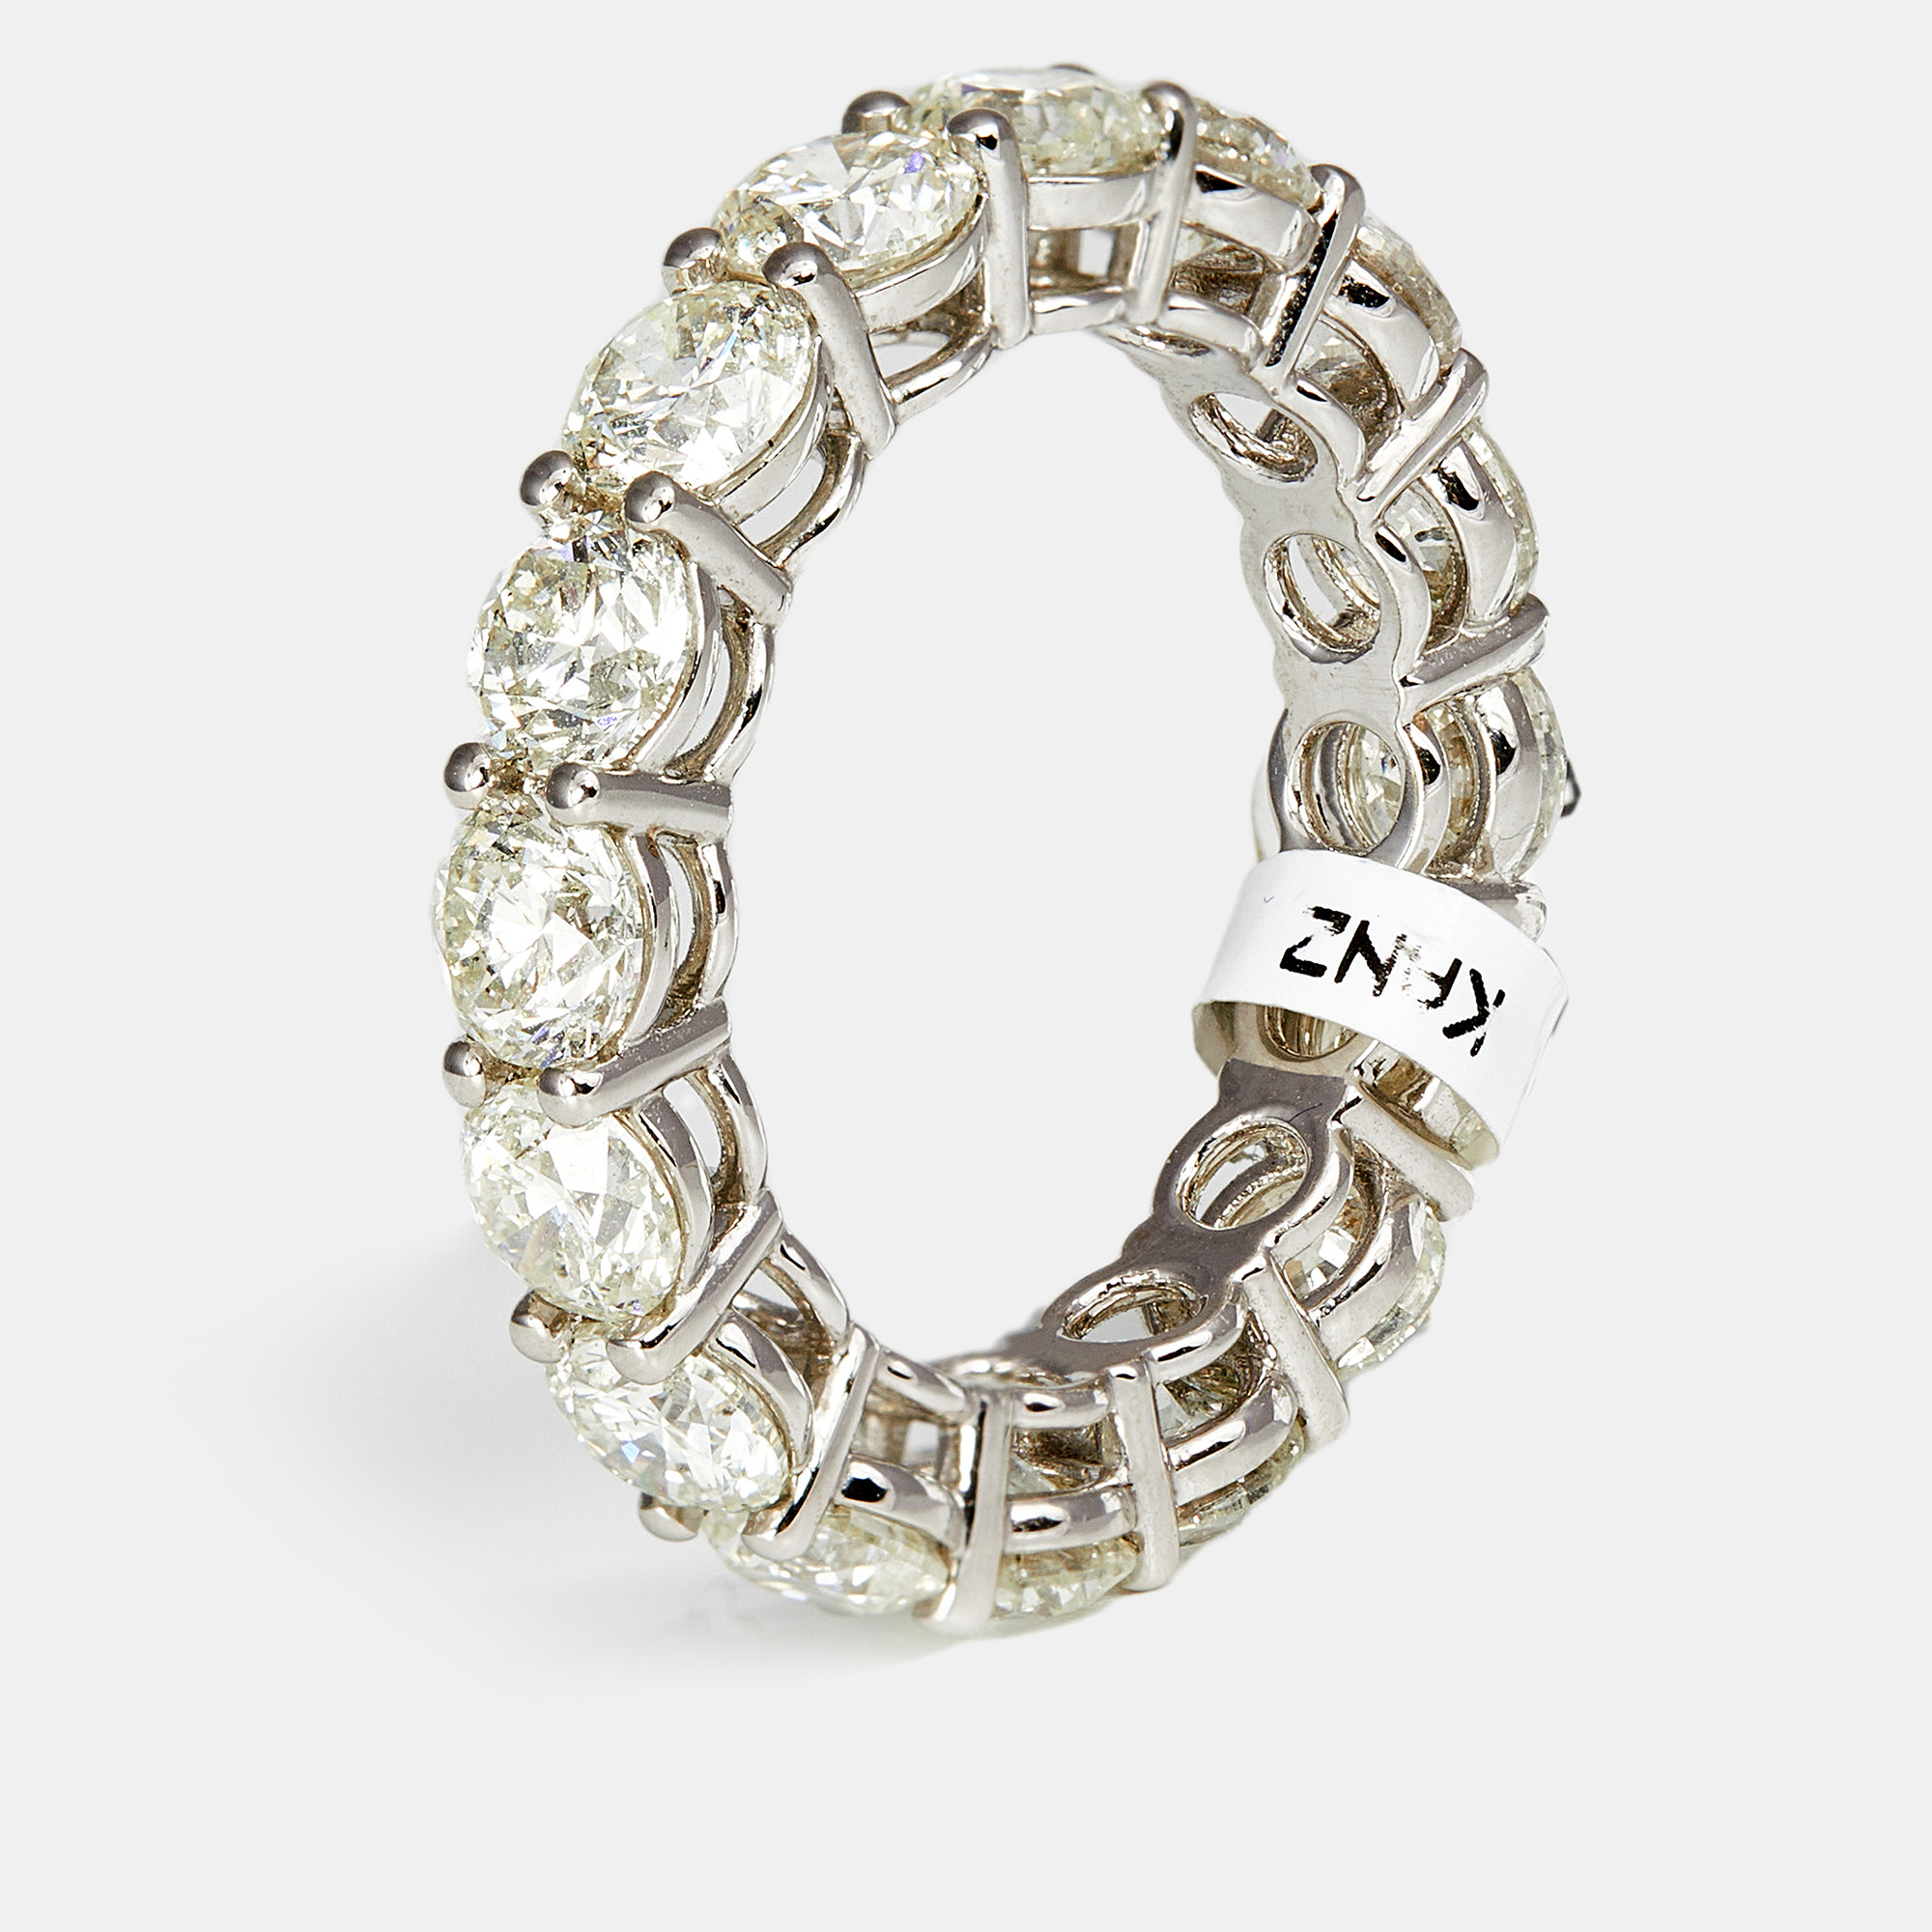 The diamond edit classic round diamond 5.84 ct 18k white gold eternity ring size 54